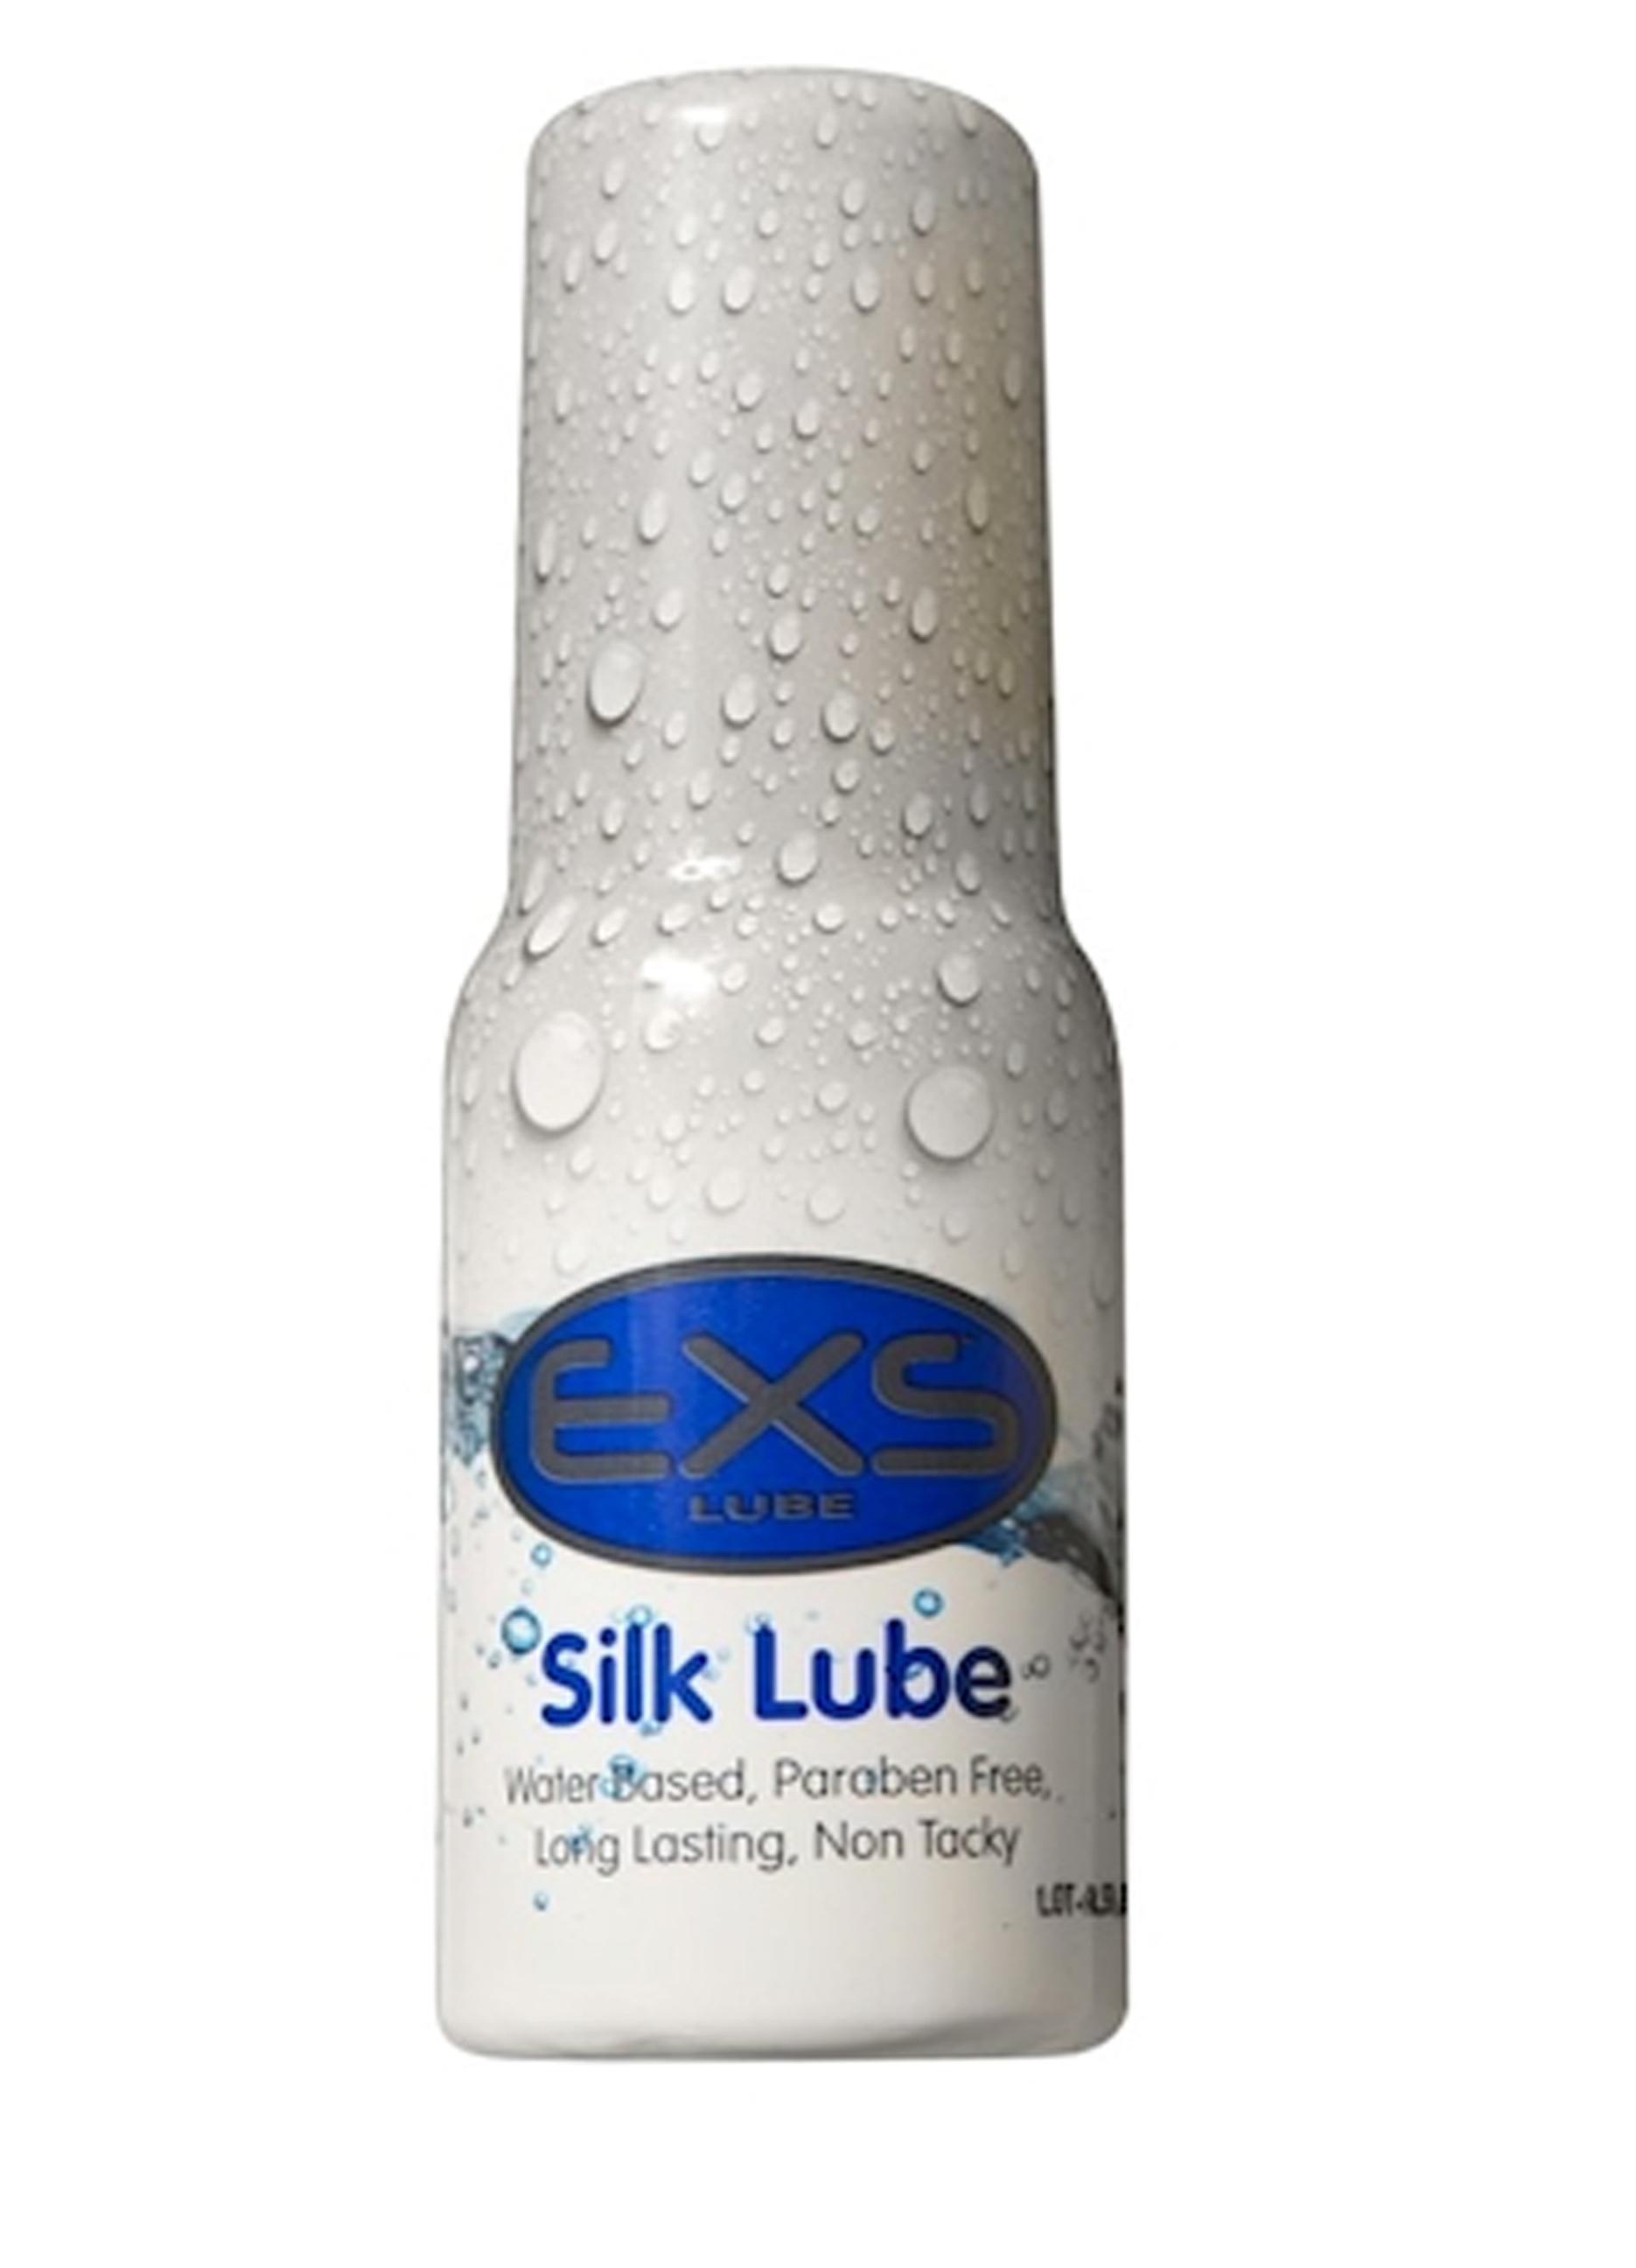 EXS Silk Lube Bottle 50ml